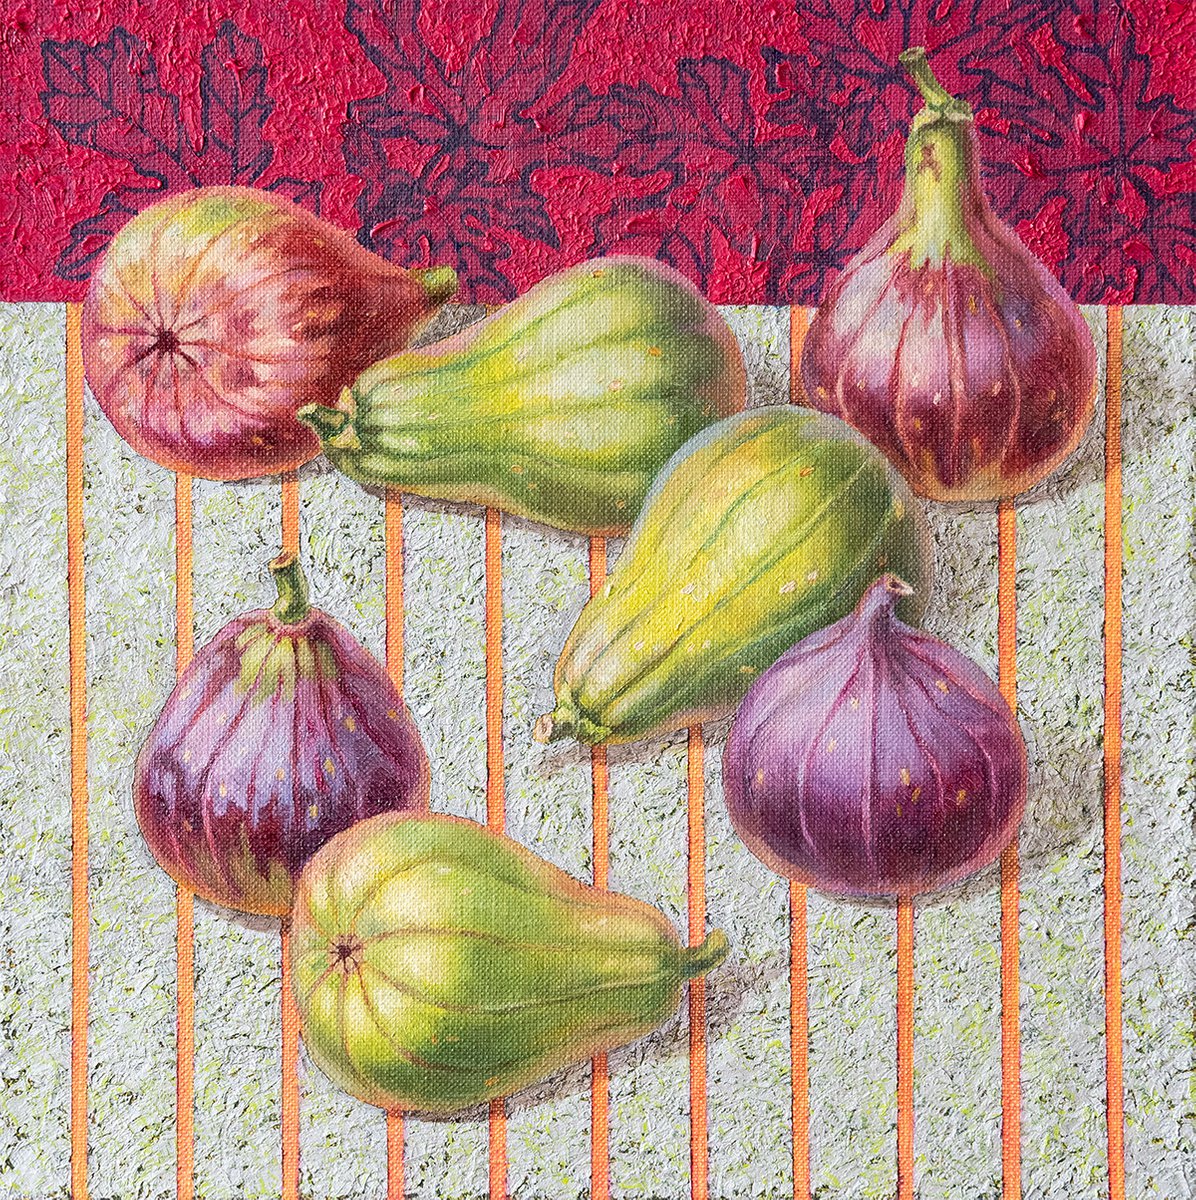 Figs on silver tablecloth by Mariia Meltsaeva